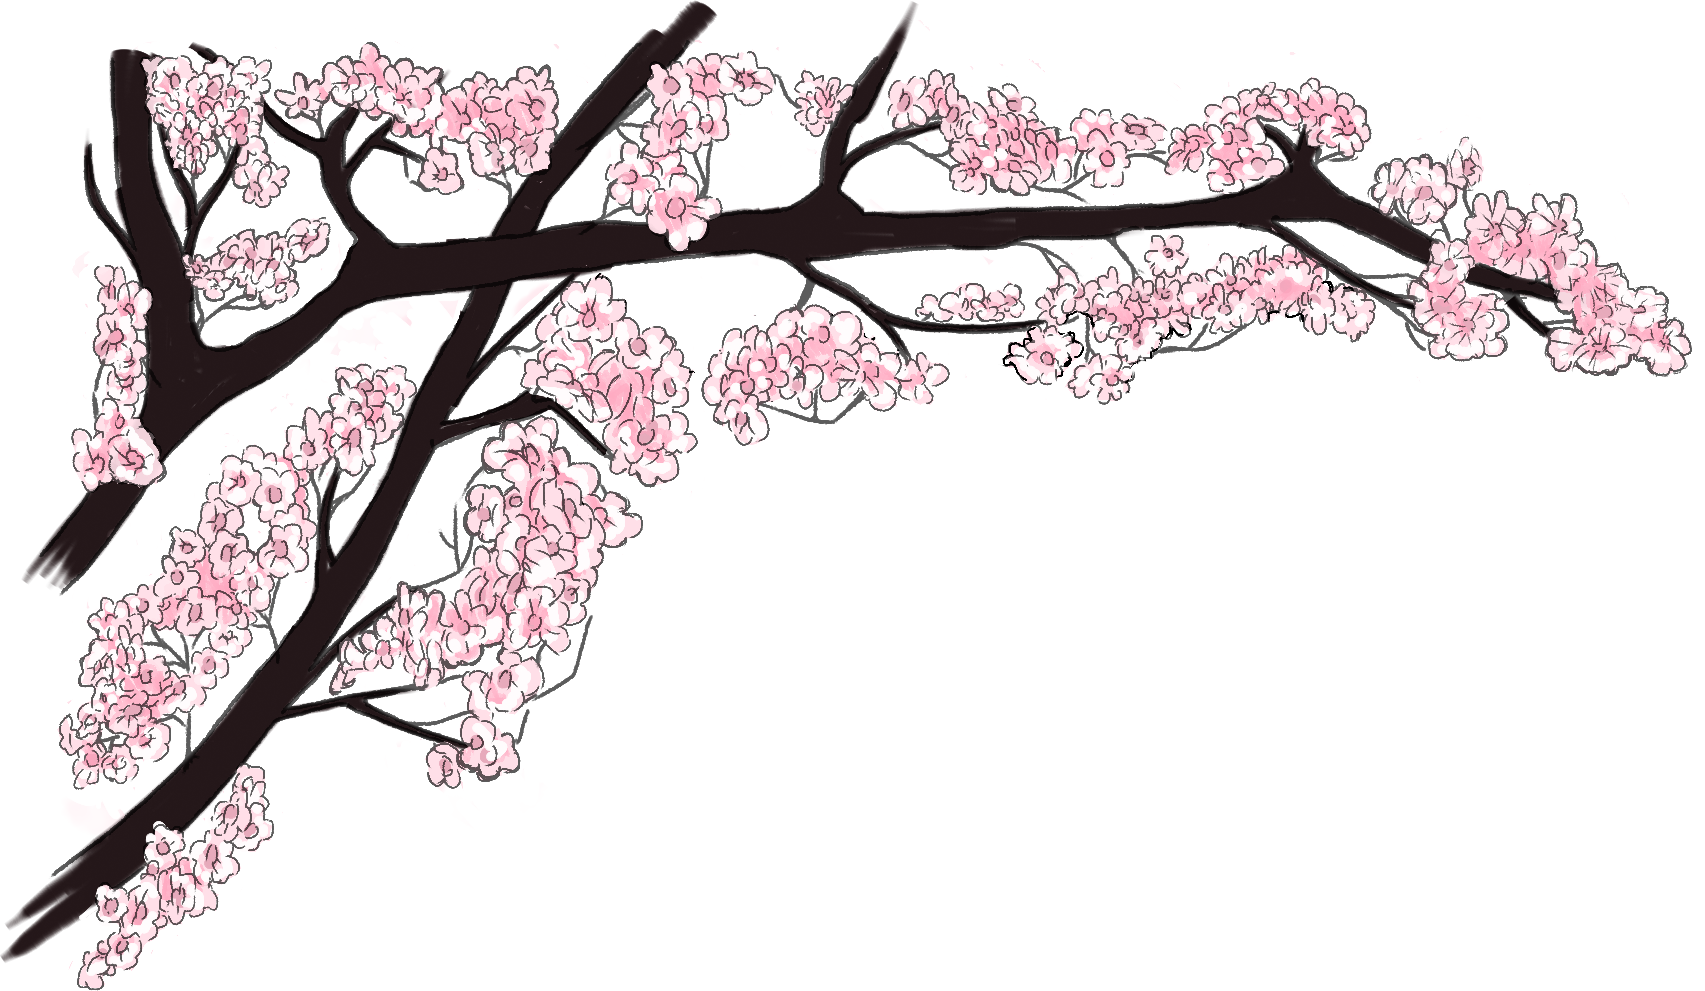 Cherry Blossom Branch Illustration PNG